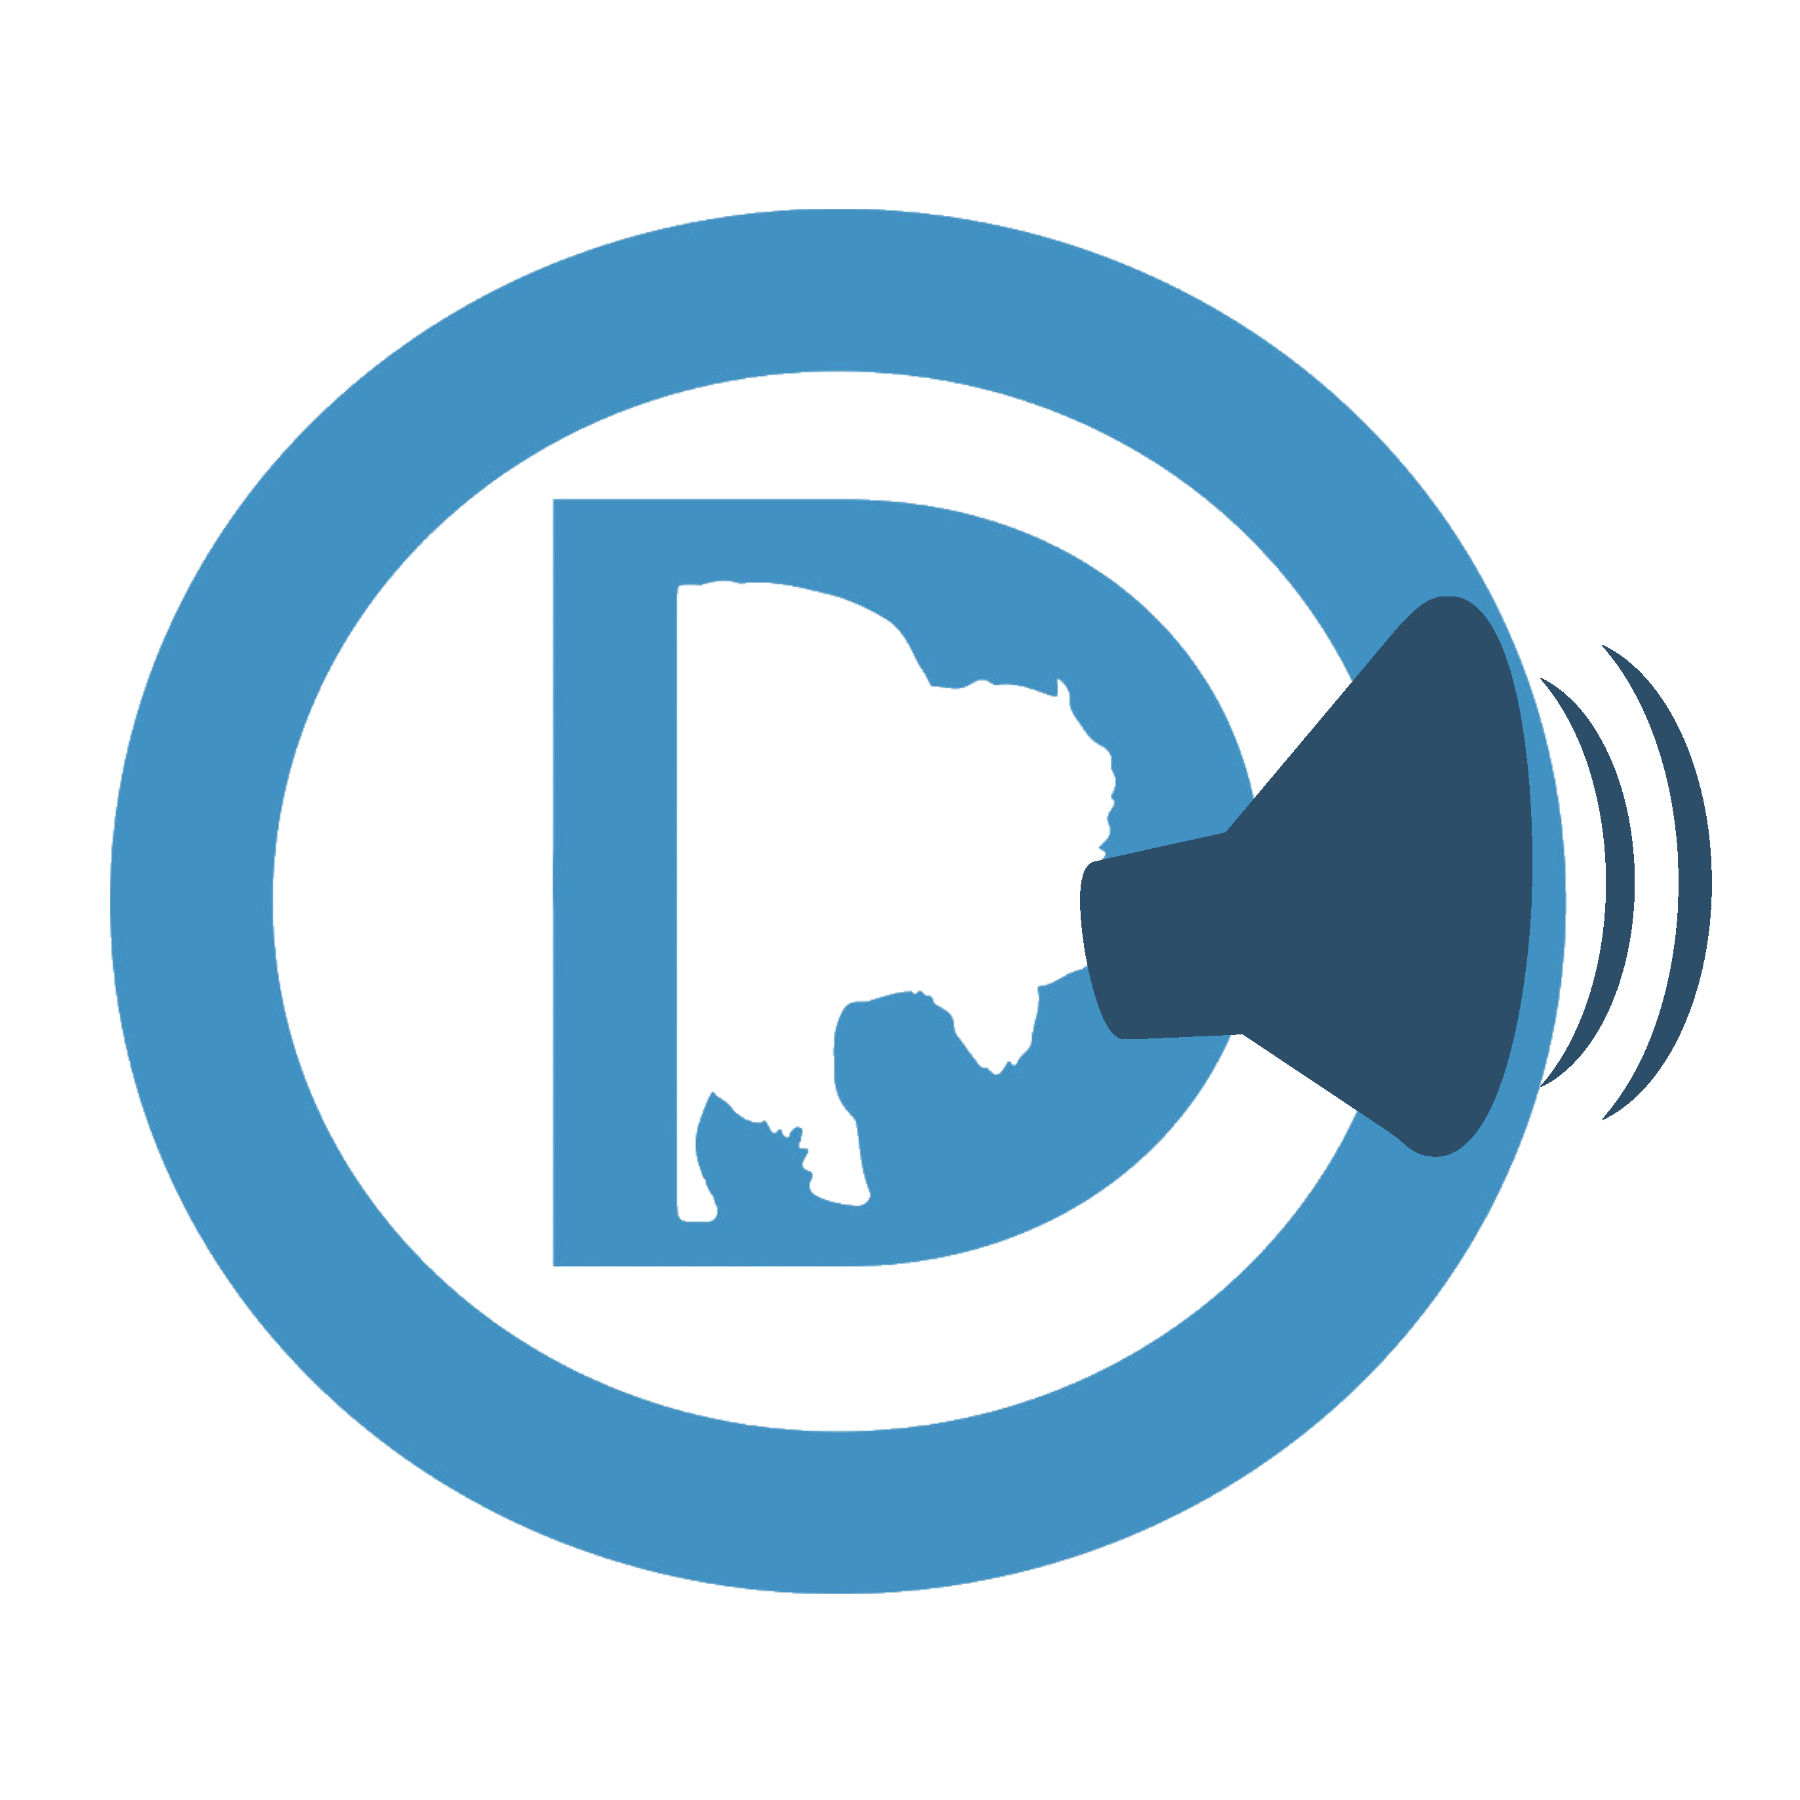 WDP logo with megaphone icon